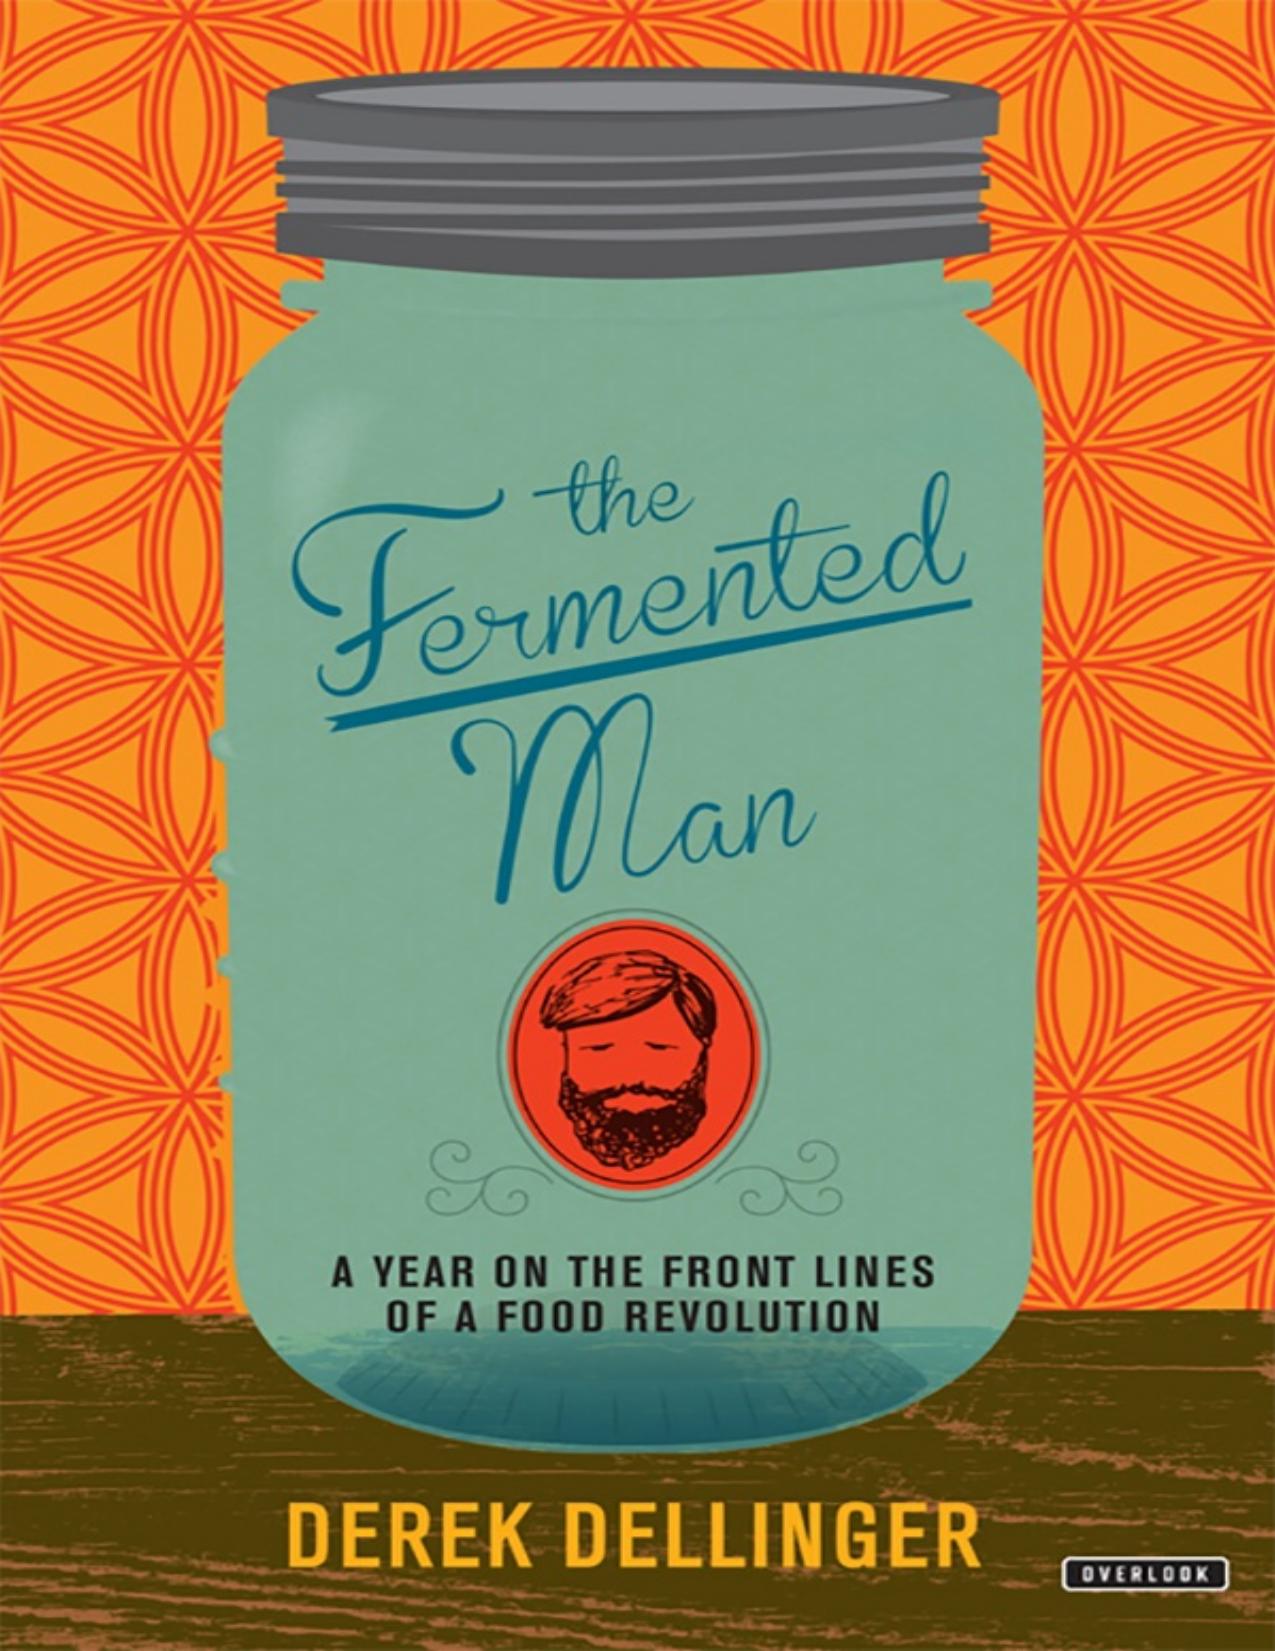 The Fermented Man by Derek Dellinger